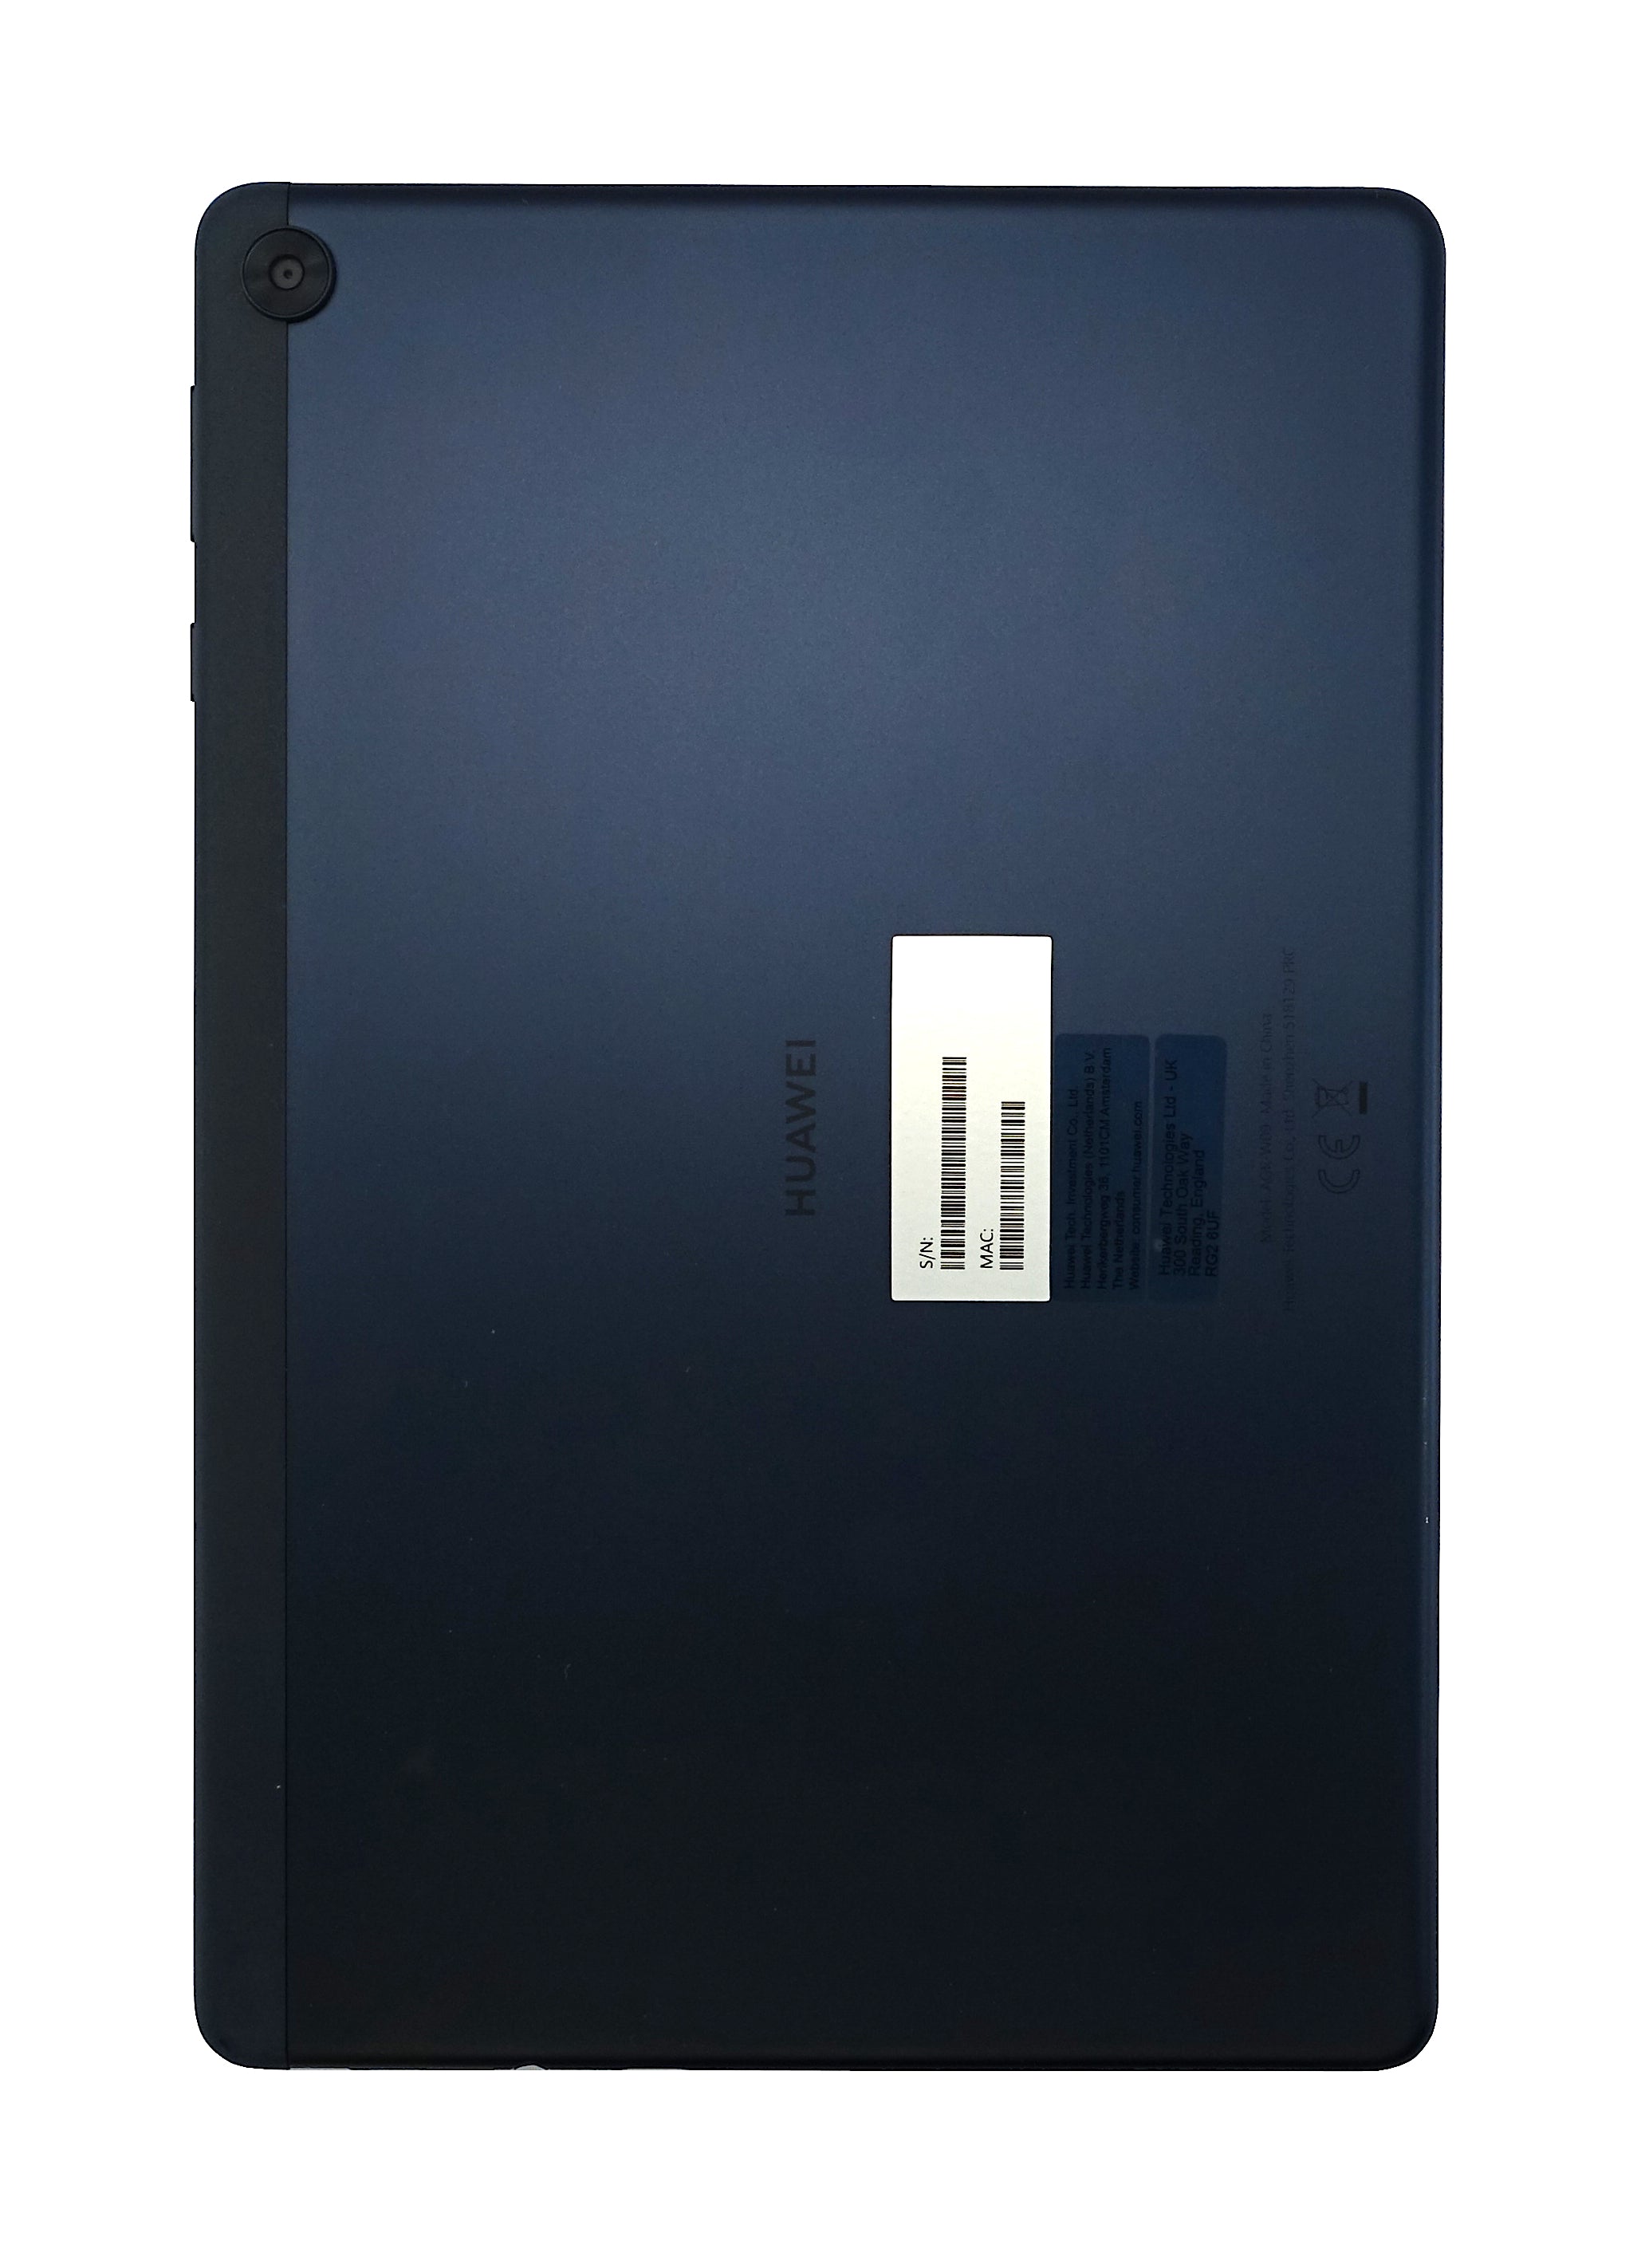 HUAWEI MatePad T10 Tablet, 9.7", 16GB, WiFi, Blue, AGR-W09